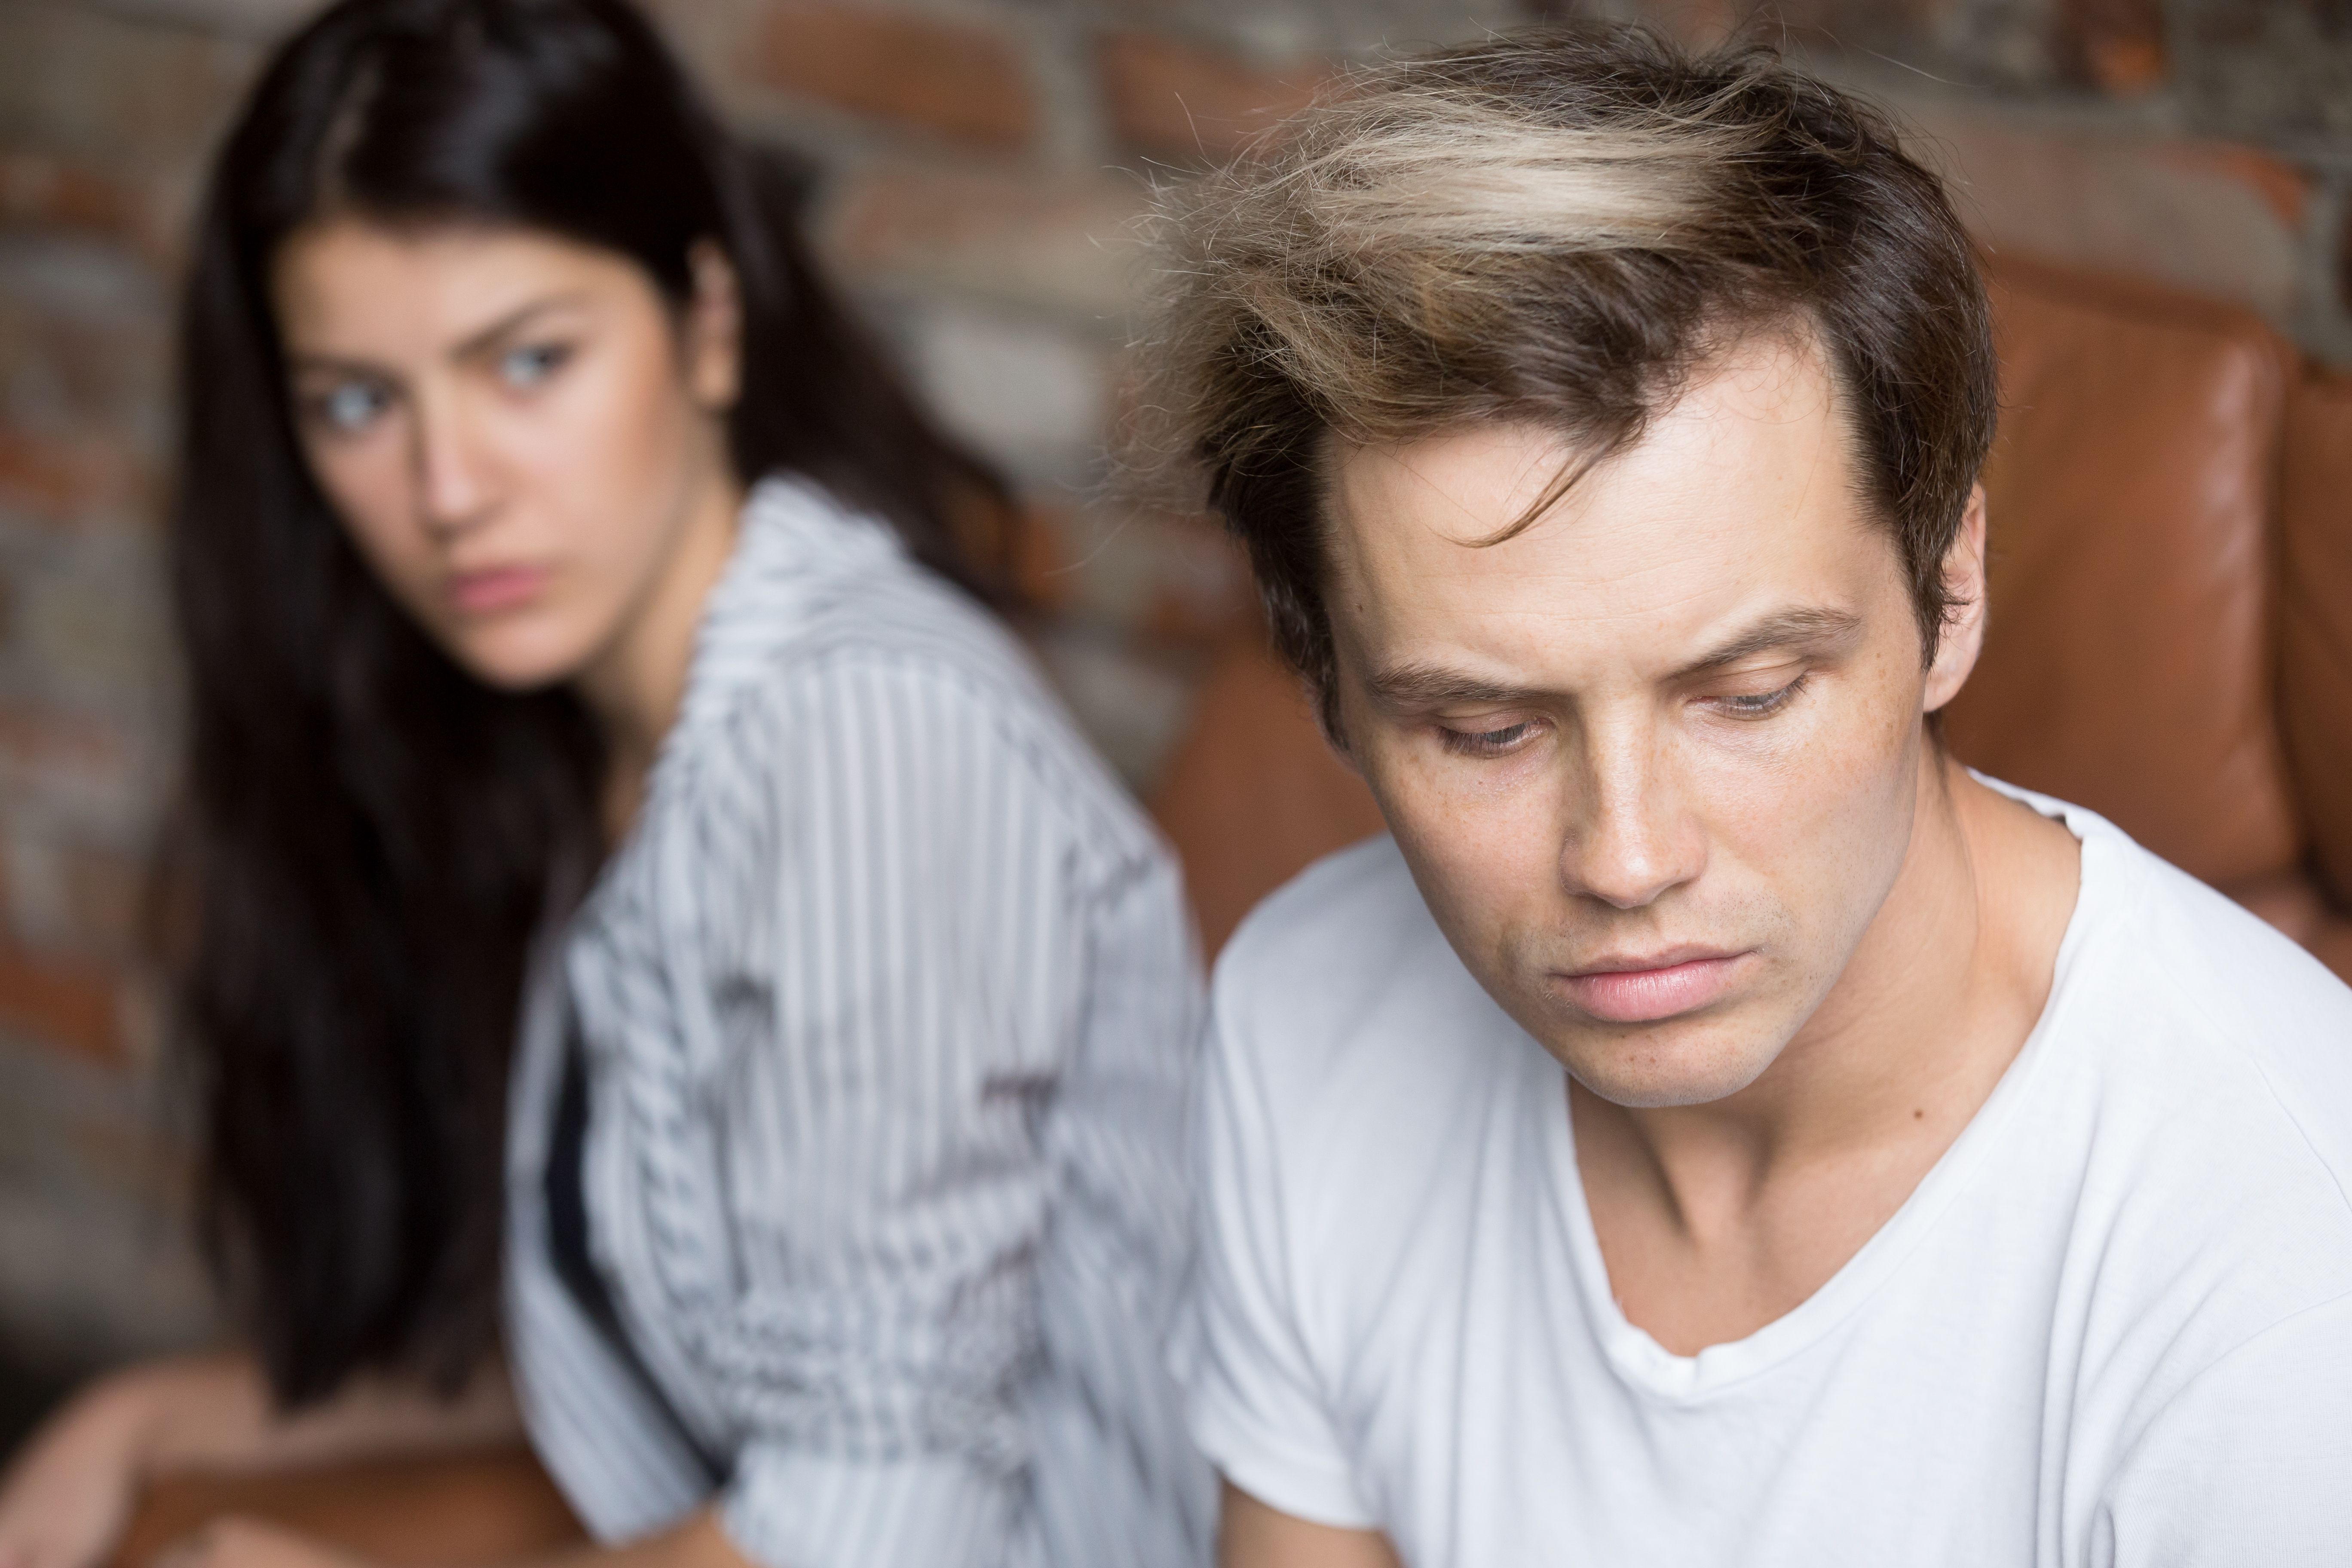 A man and woman upset. | Source: Shutterstock